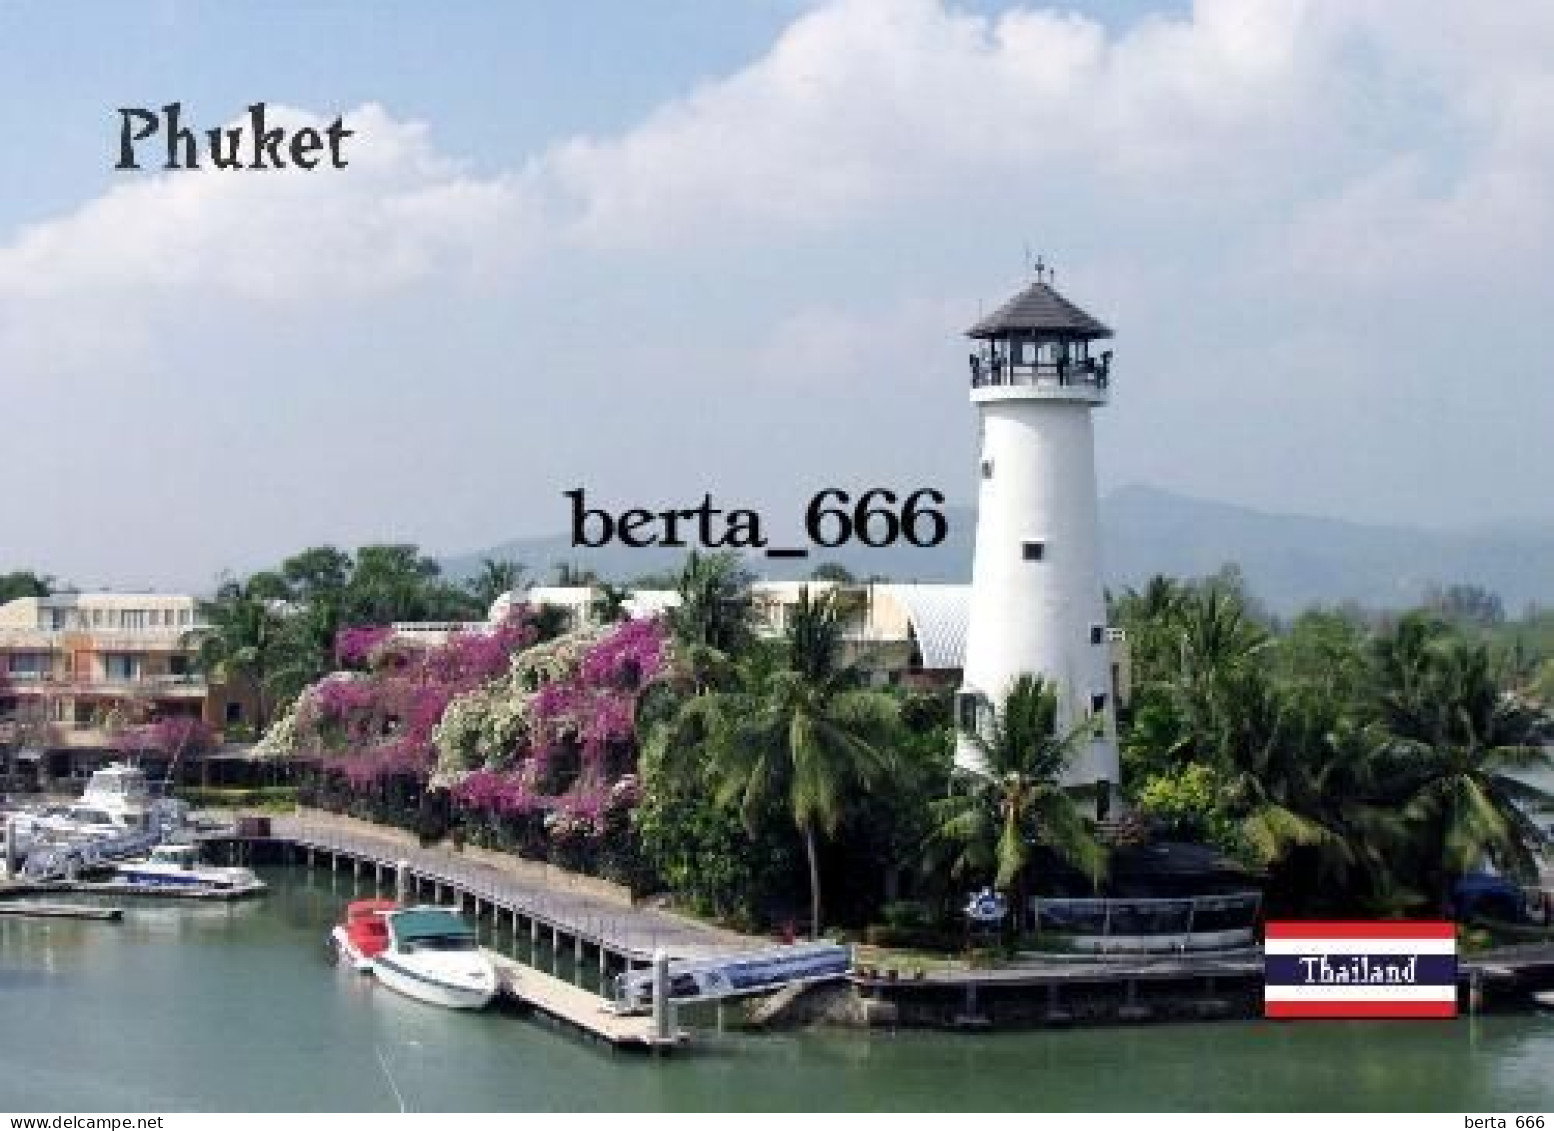 Thailand Phuket Island Lighthouse New Postcard - Leuchttürme